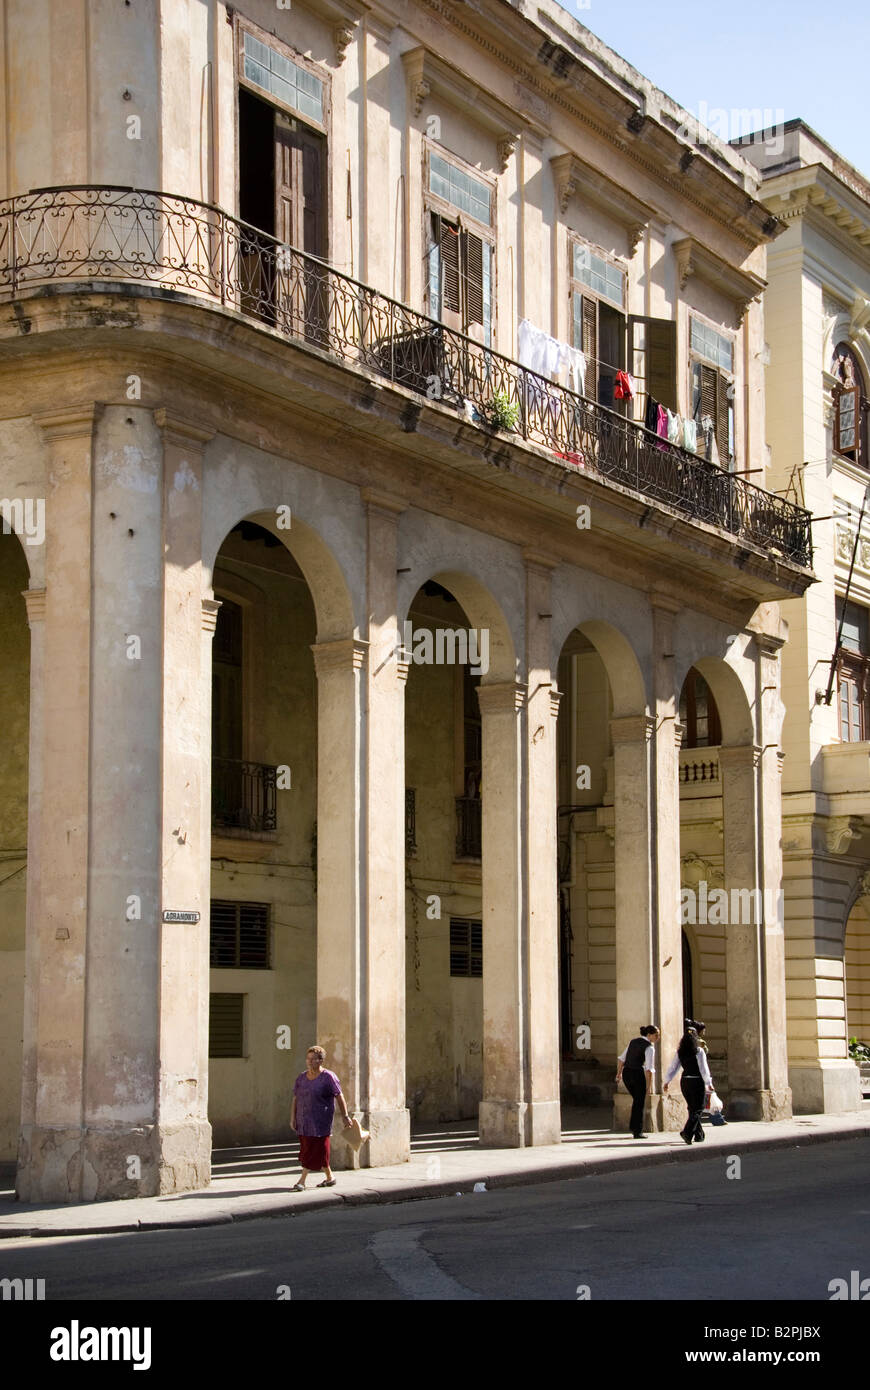 Street scene with old colonial architecture in La Habana Vieja Havana Cuba Stock Photo